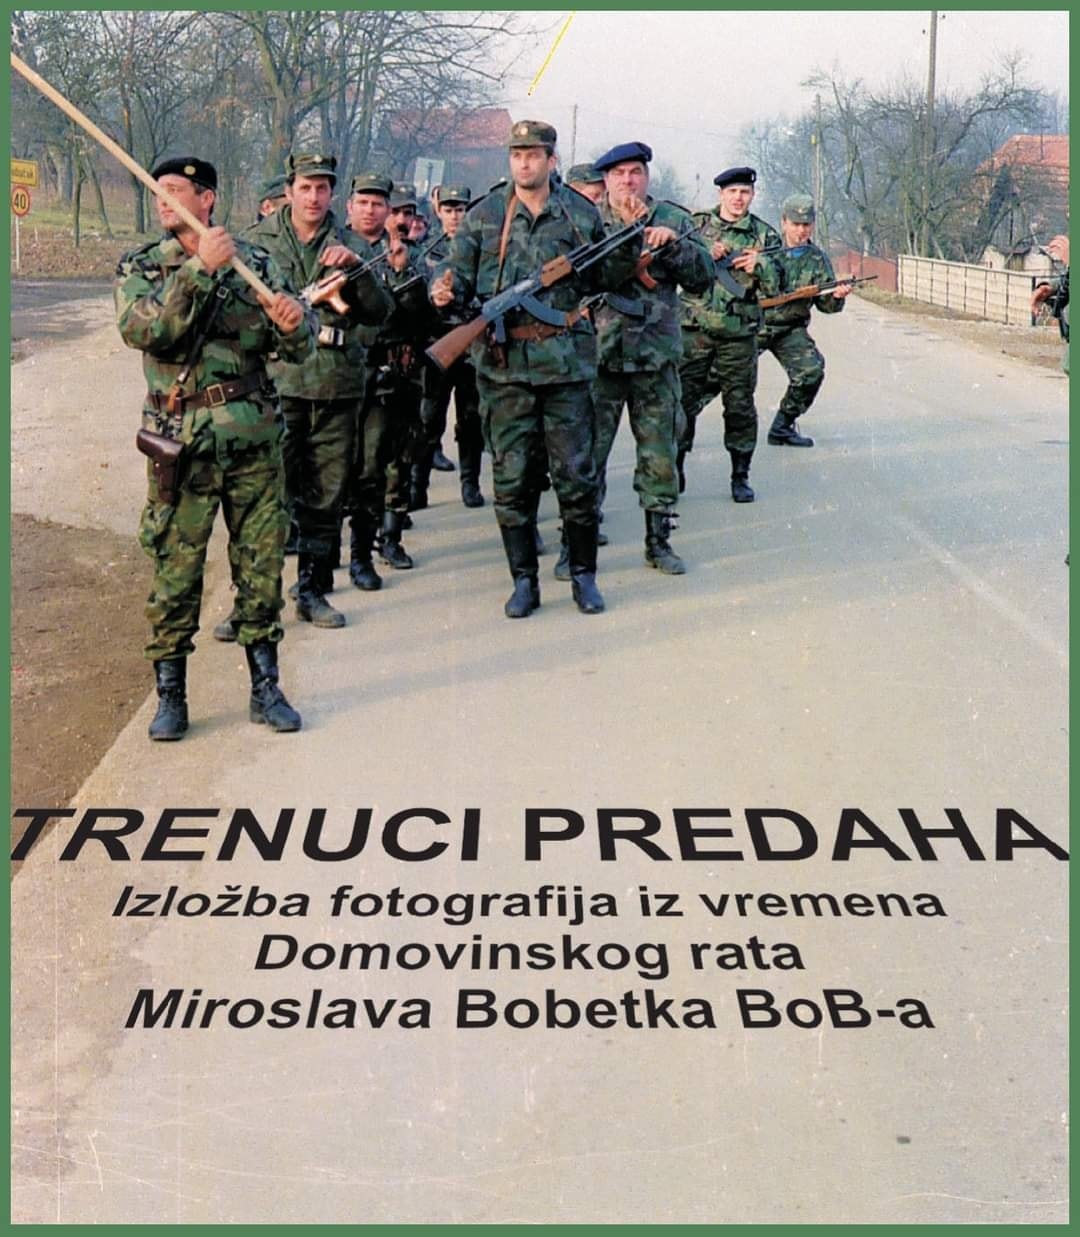 You are currently viewing Izložba fotografija Miroslava Bobetka BoB-a “Trenuci predaha”